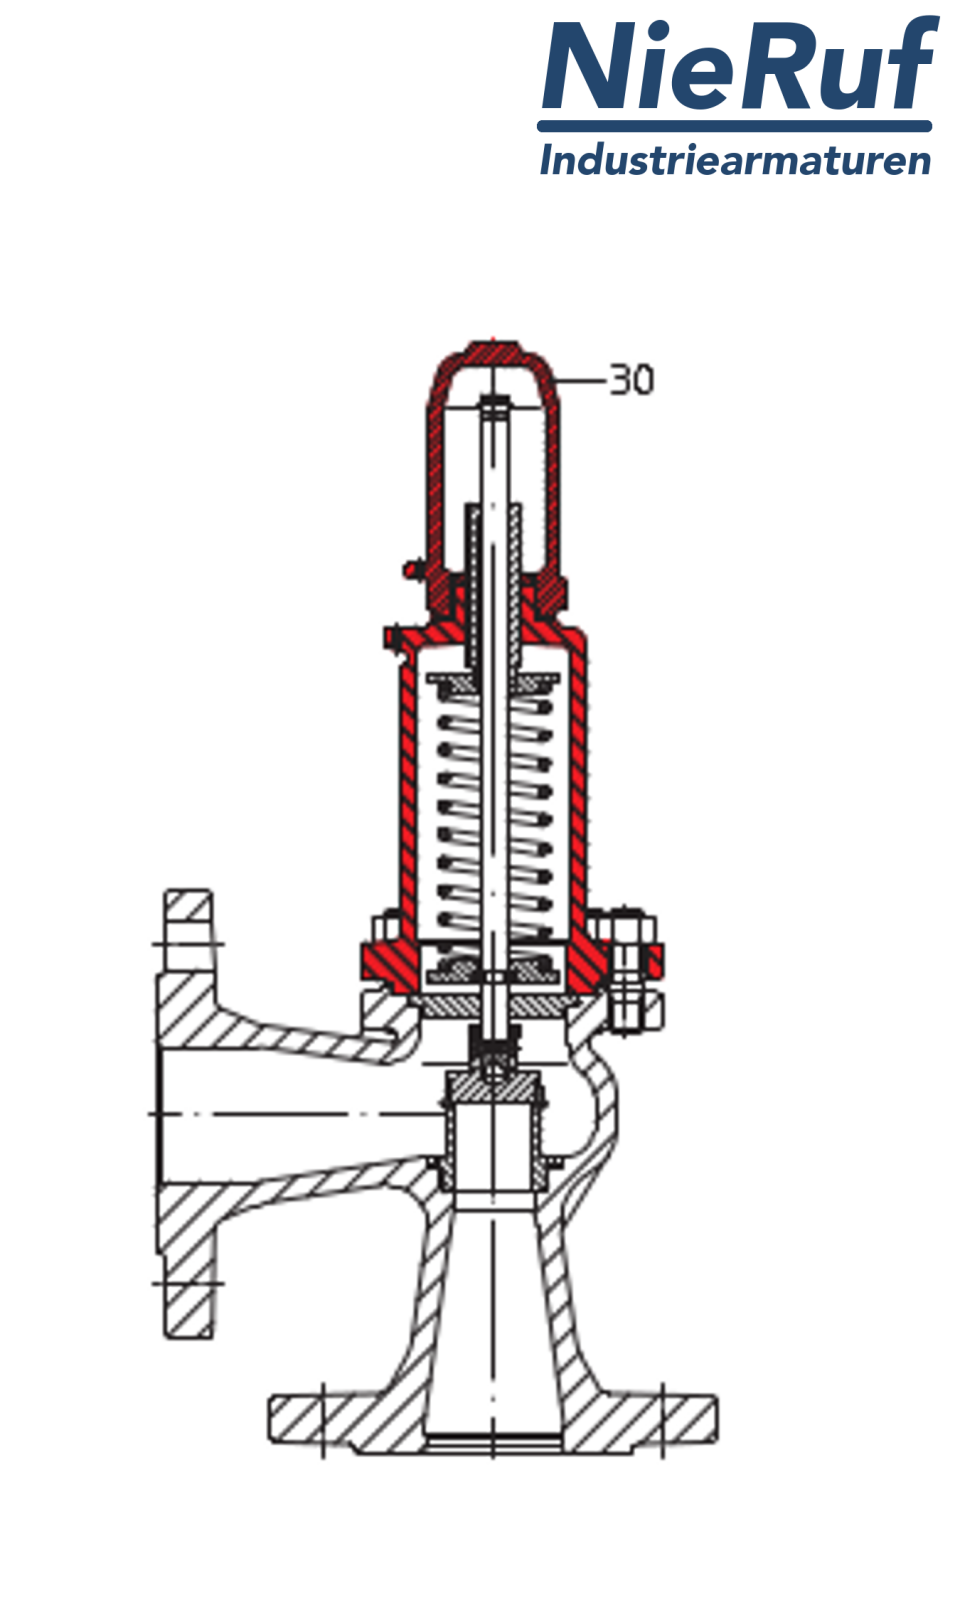 flange-safety valve DN80/DN80 SF0201, cast steel 1.0619+N FPM, without lever